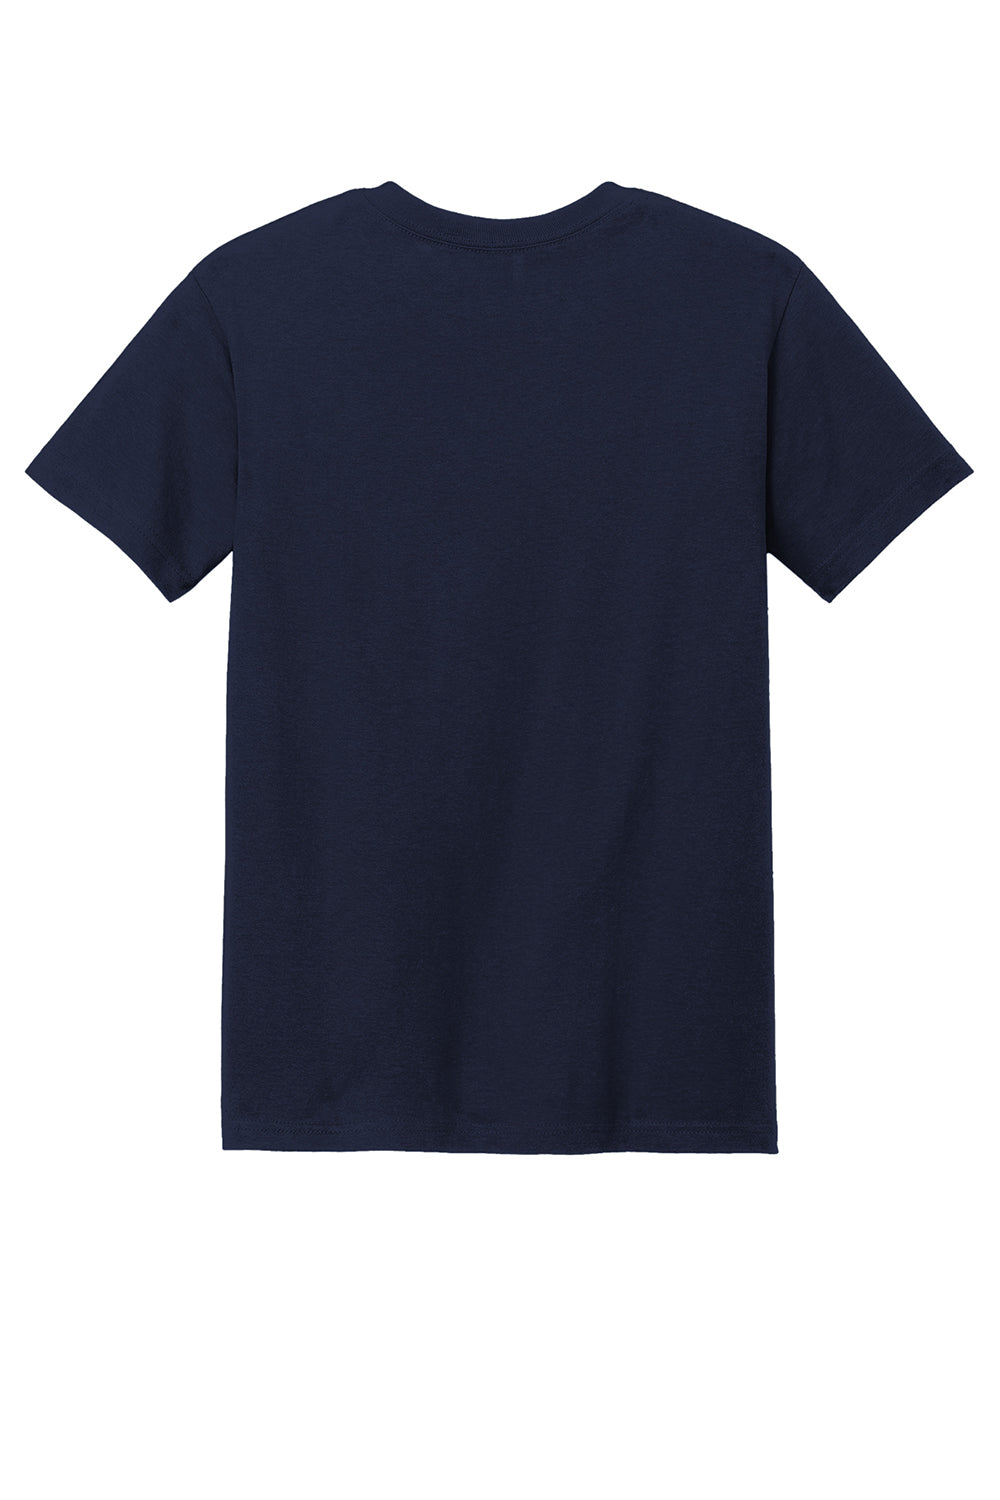 American Apparel 1301/AL1301 Mens Short Sleeve Crewneck T-Shirt True Navy Blue Flat Back